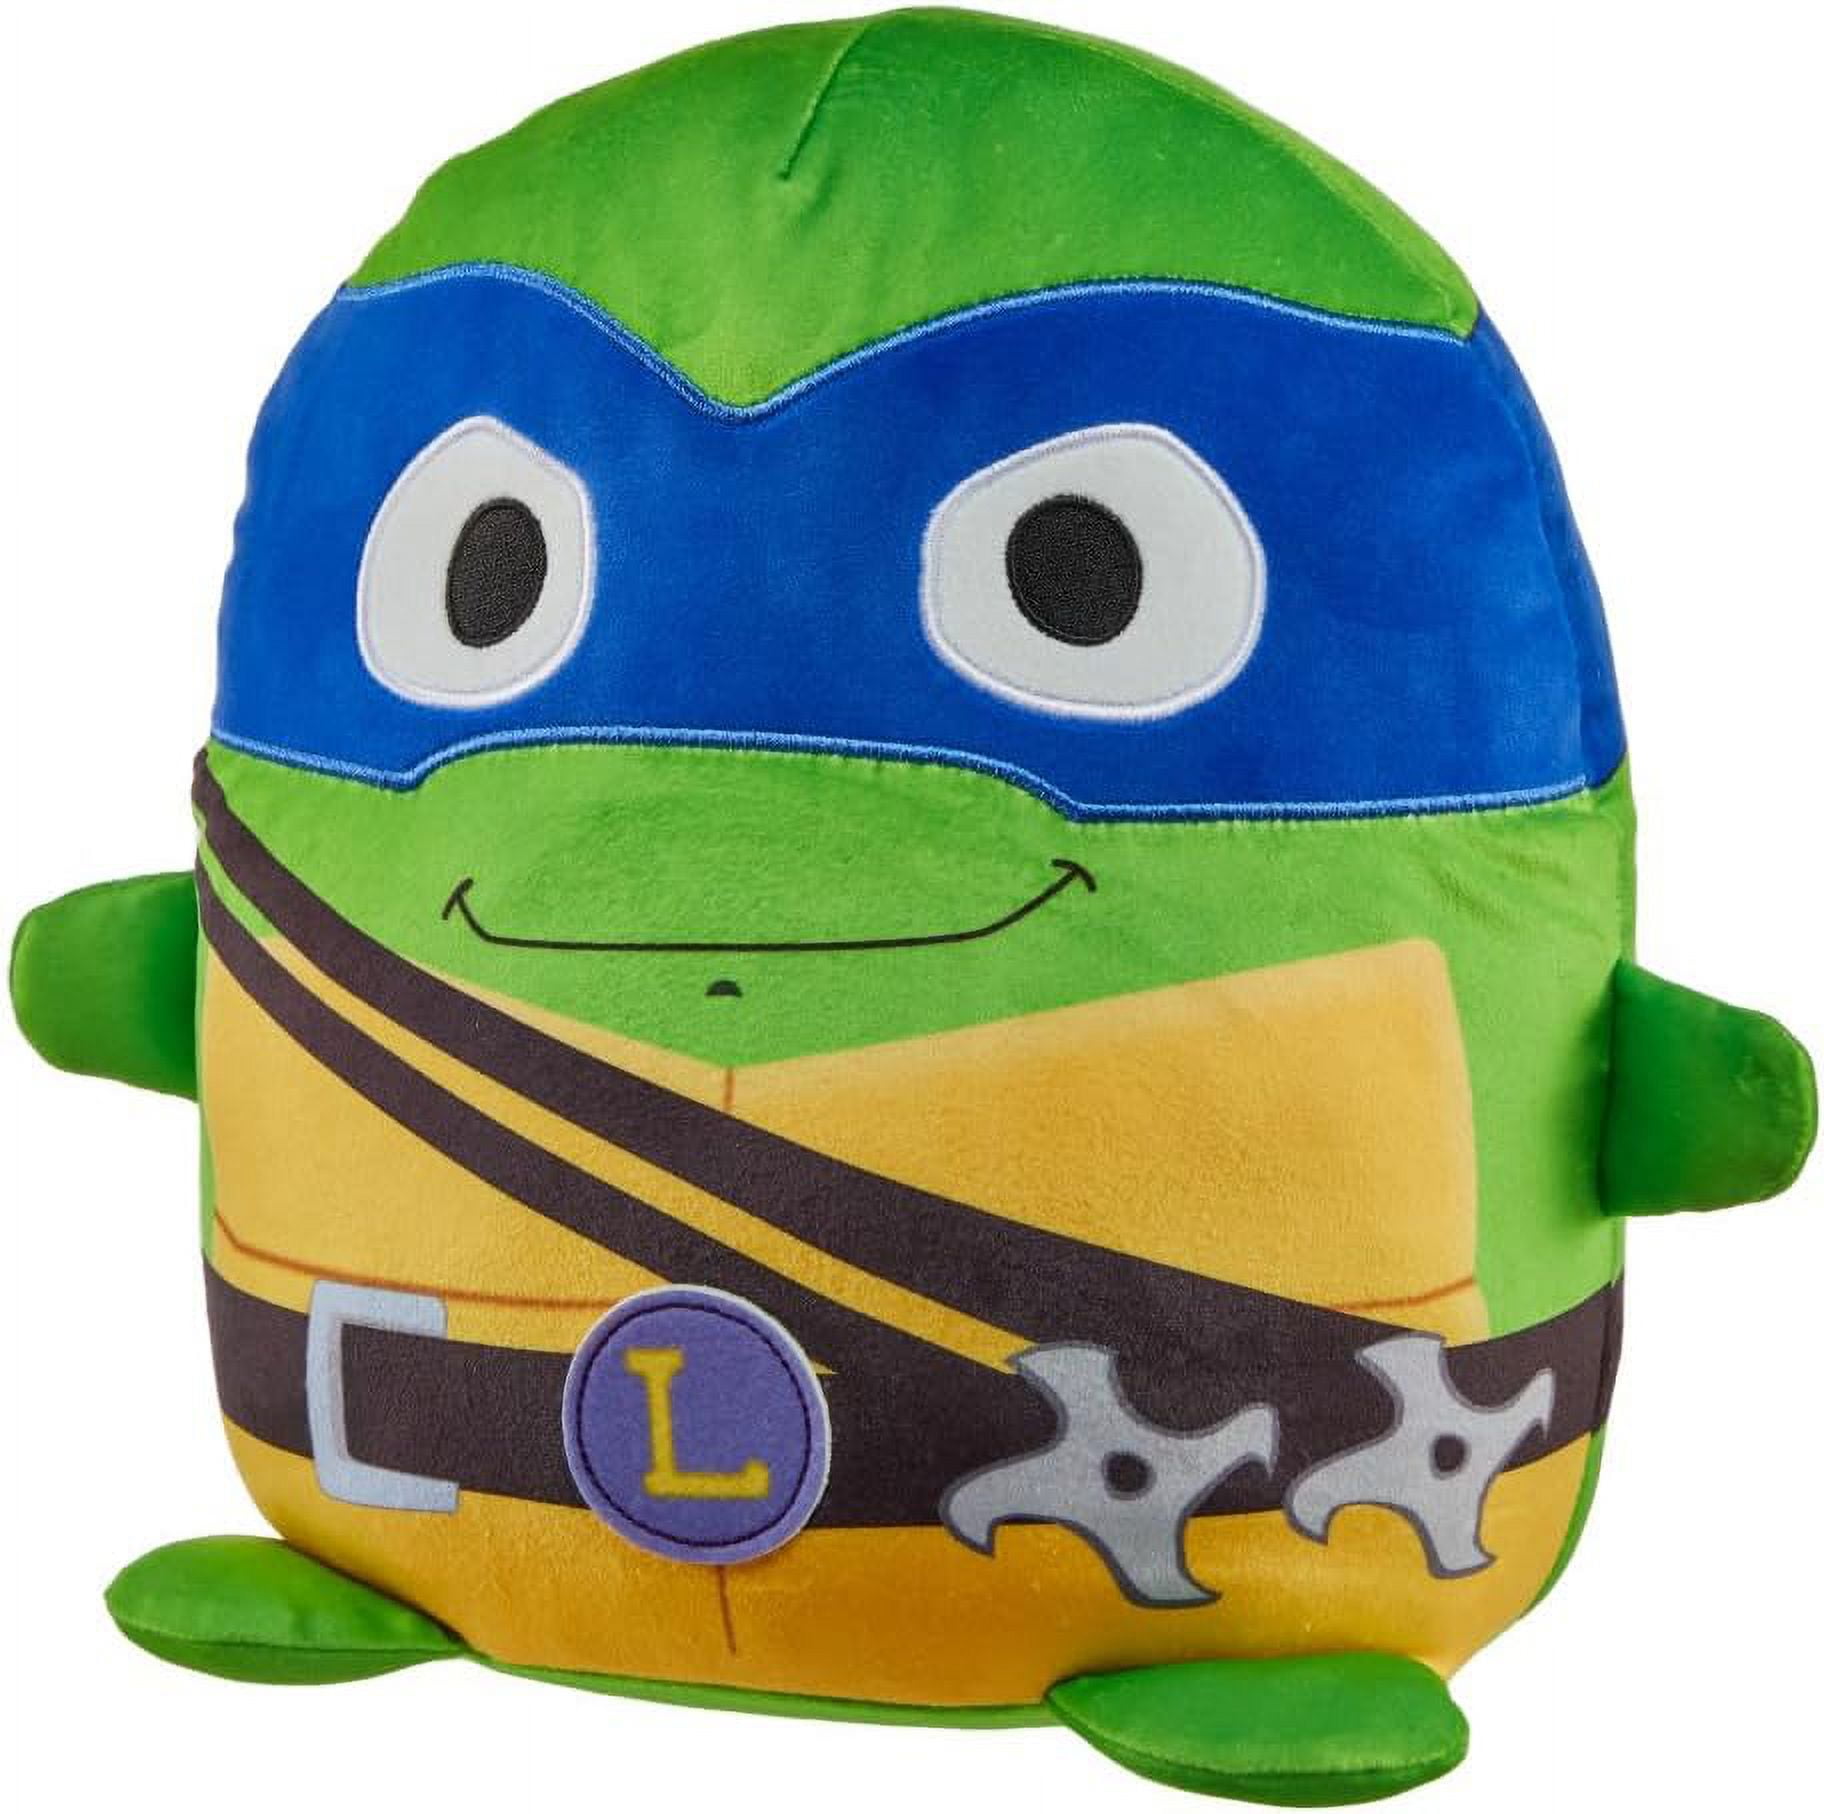 New Fashion Big Turtle Plush Toy Q Variant Era Ninja Turtle Doll